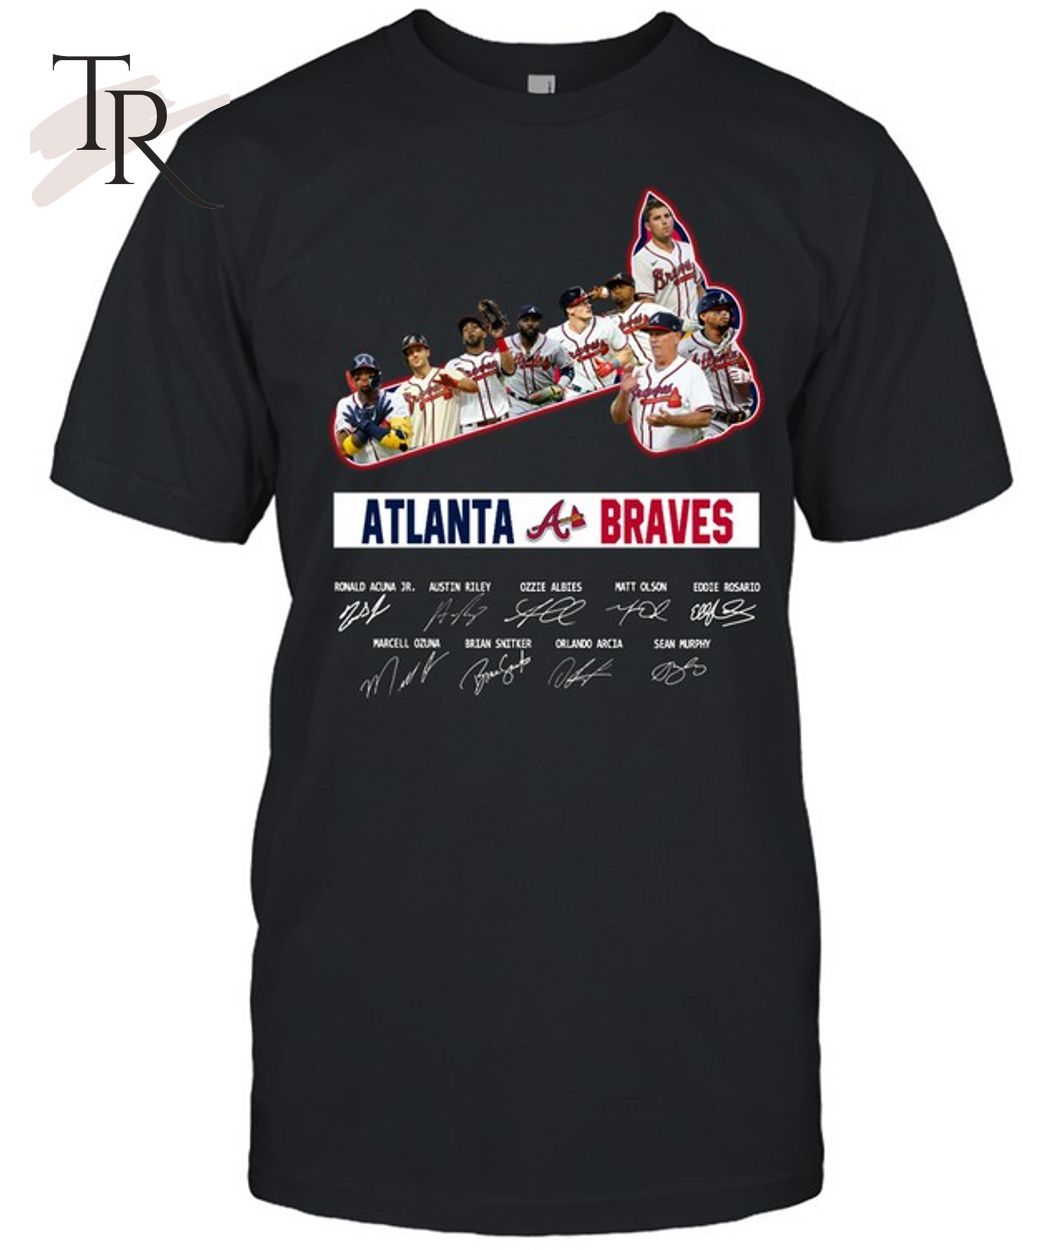 Design limited Edition Atlanta Braves Unisex T-Shirt, hoodie